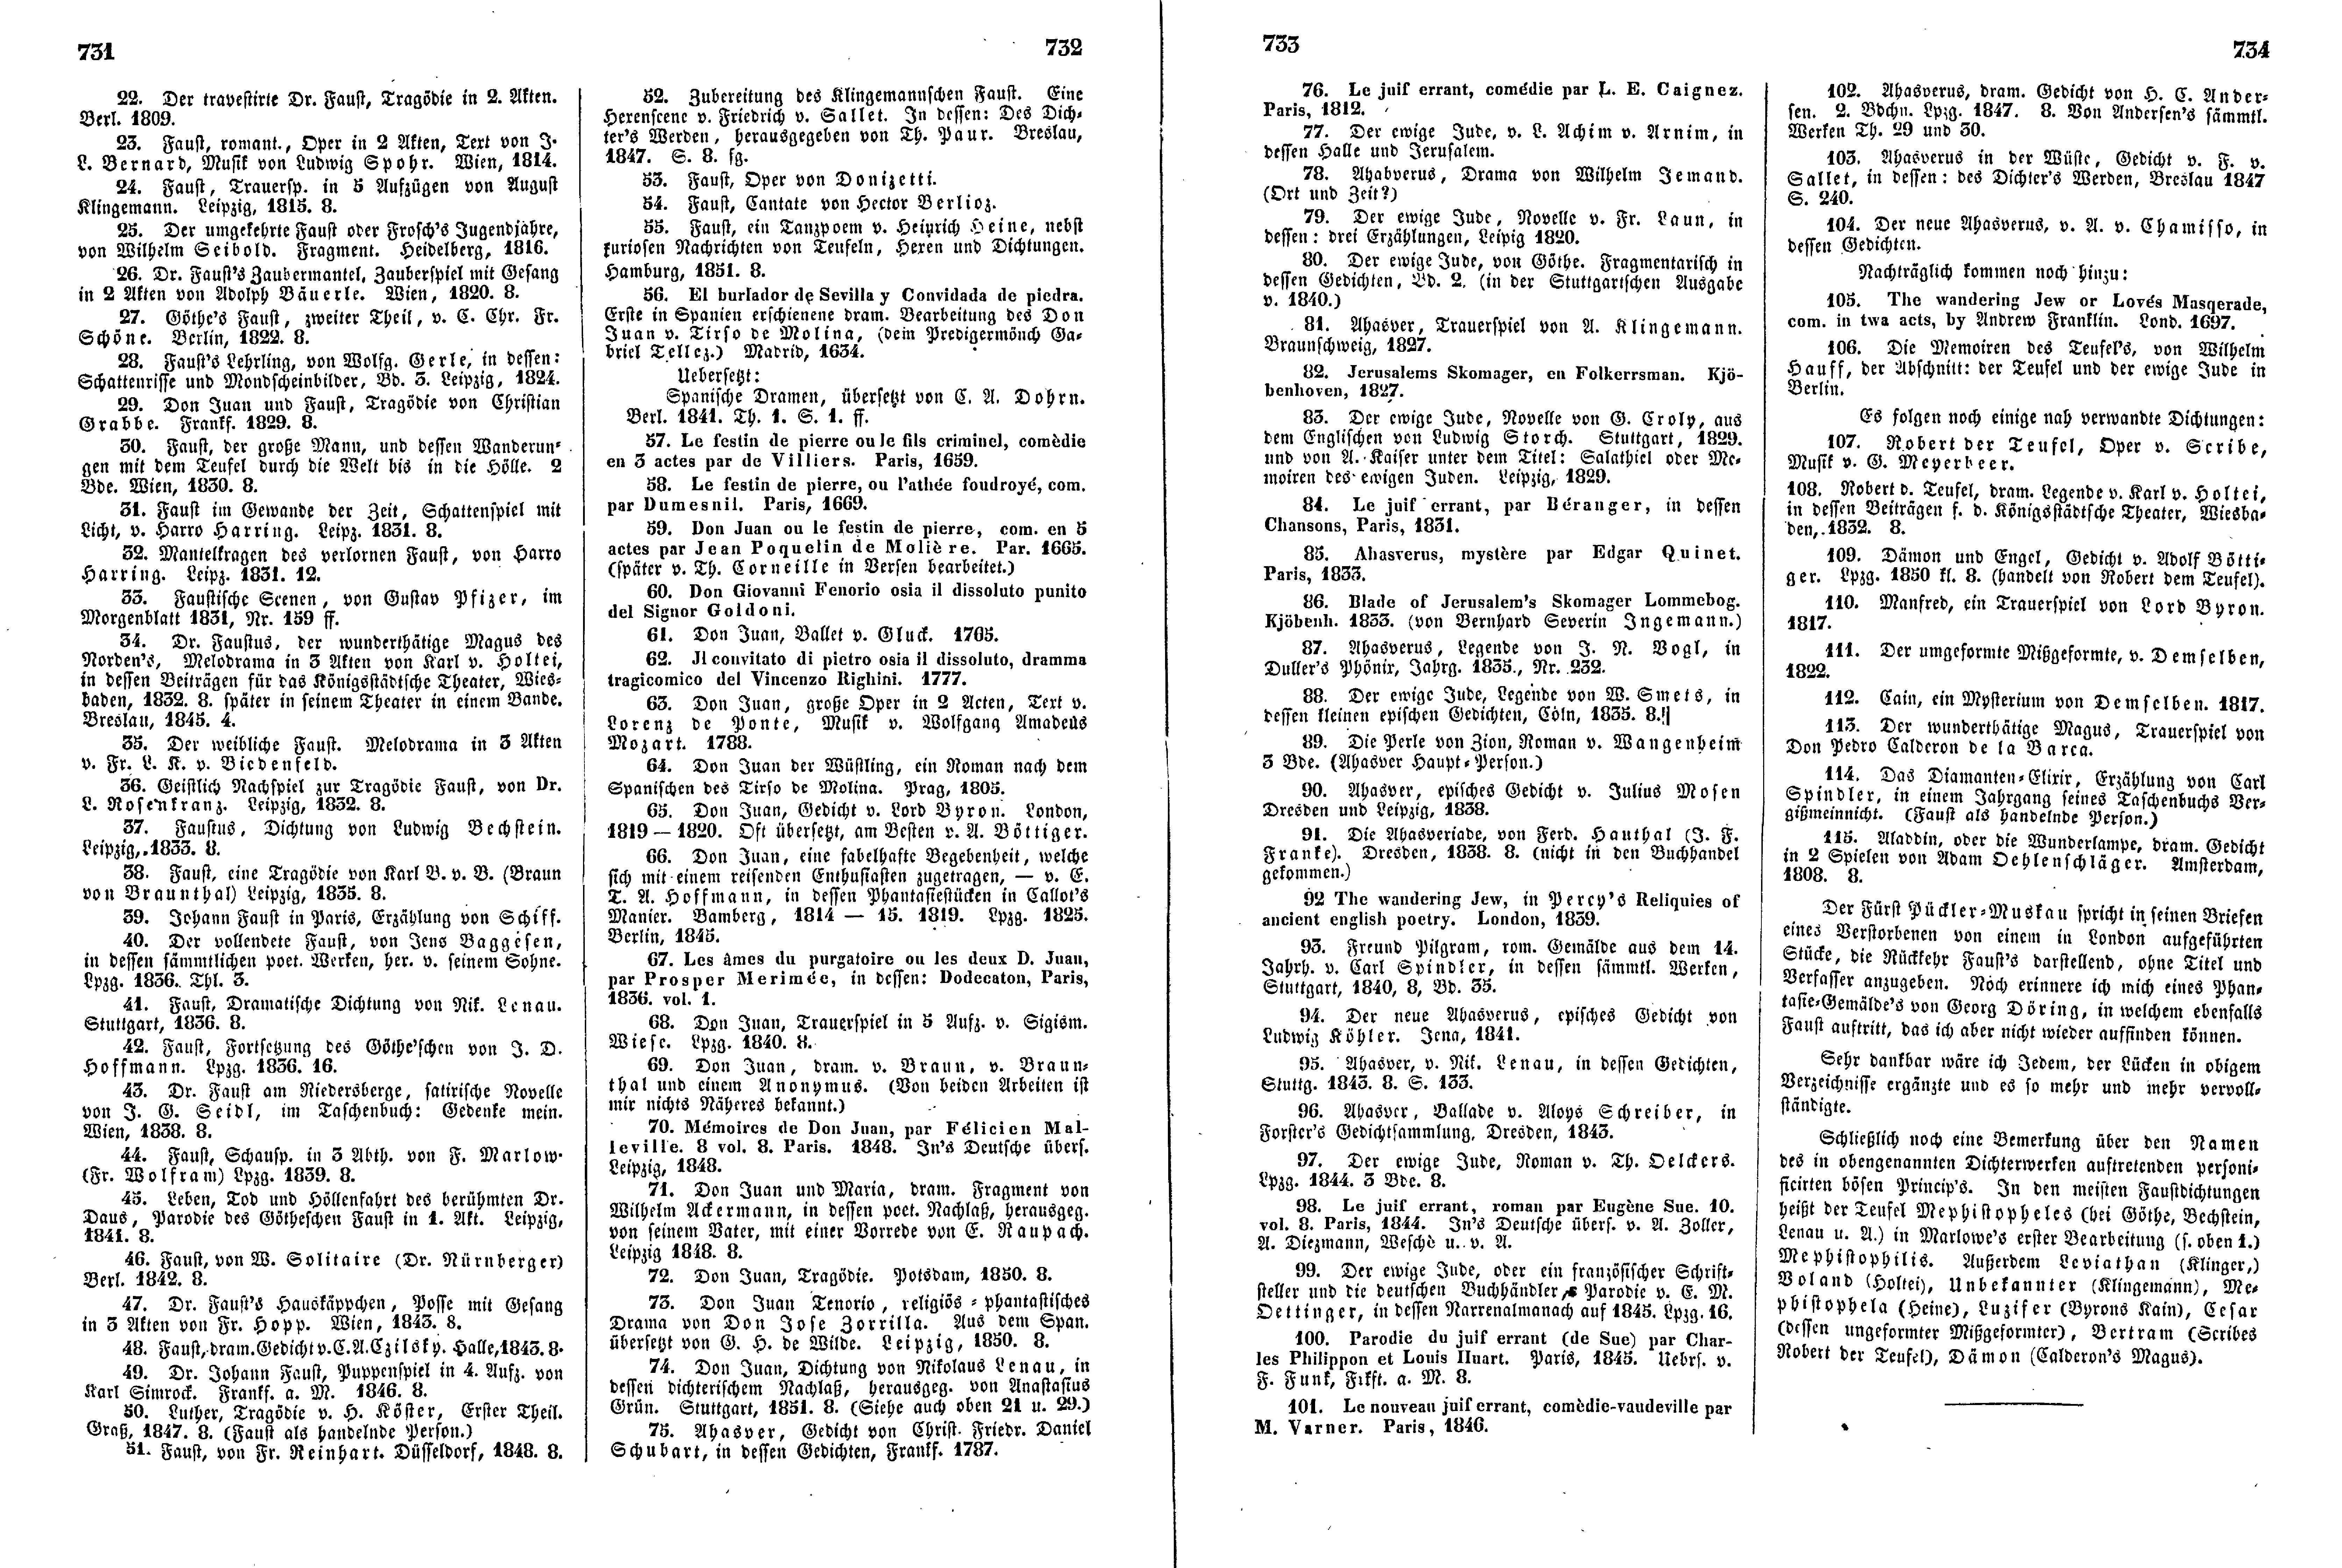 Das Inland [18] (1853) | 193. (731-734) Main body of text